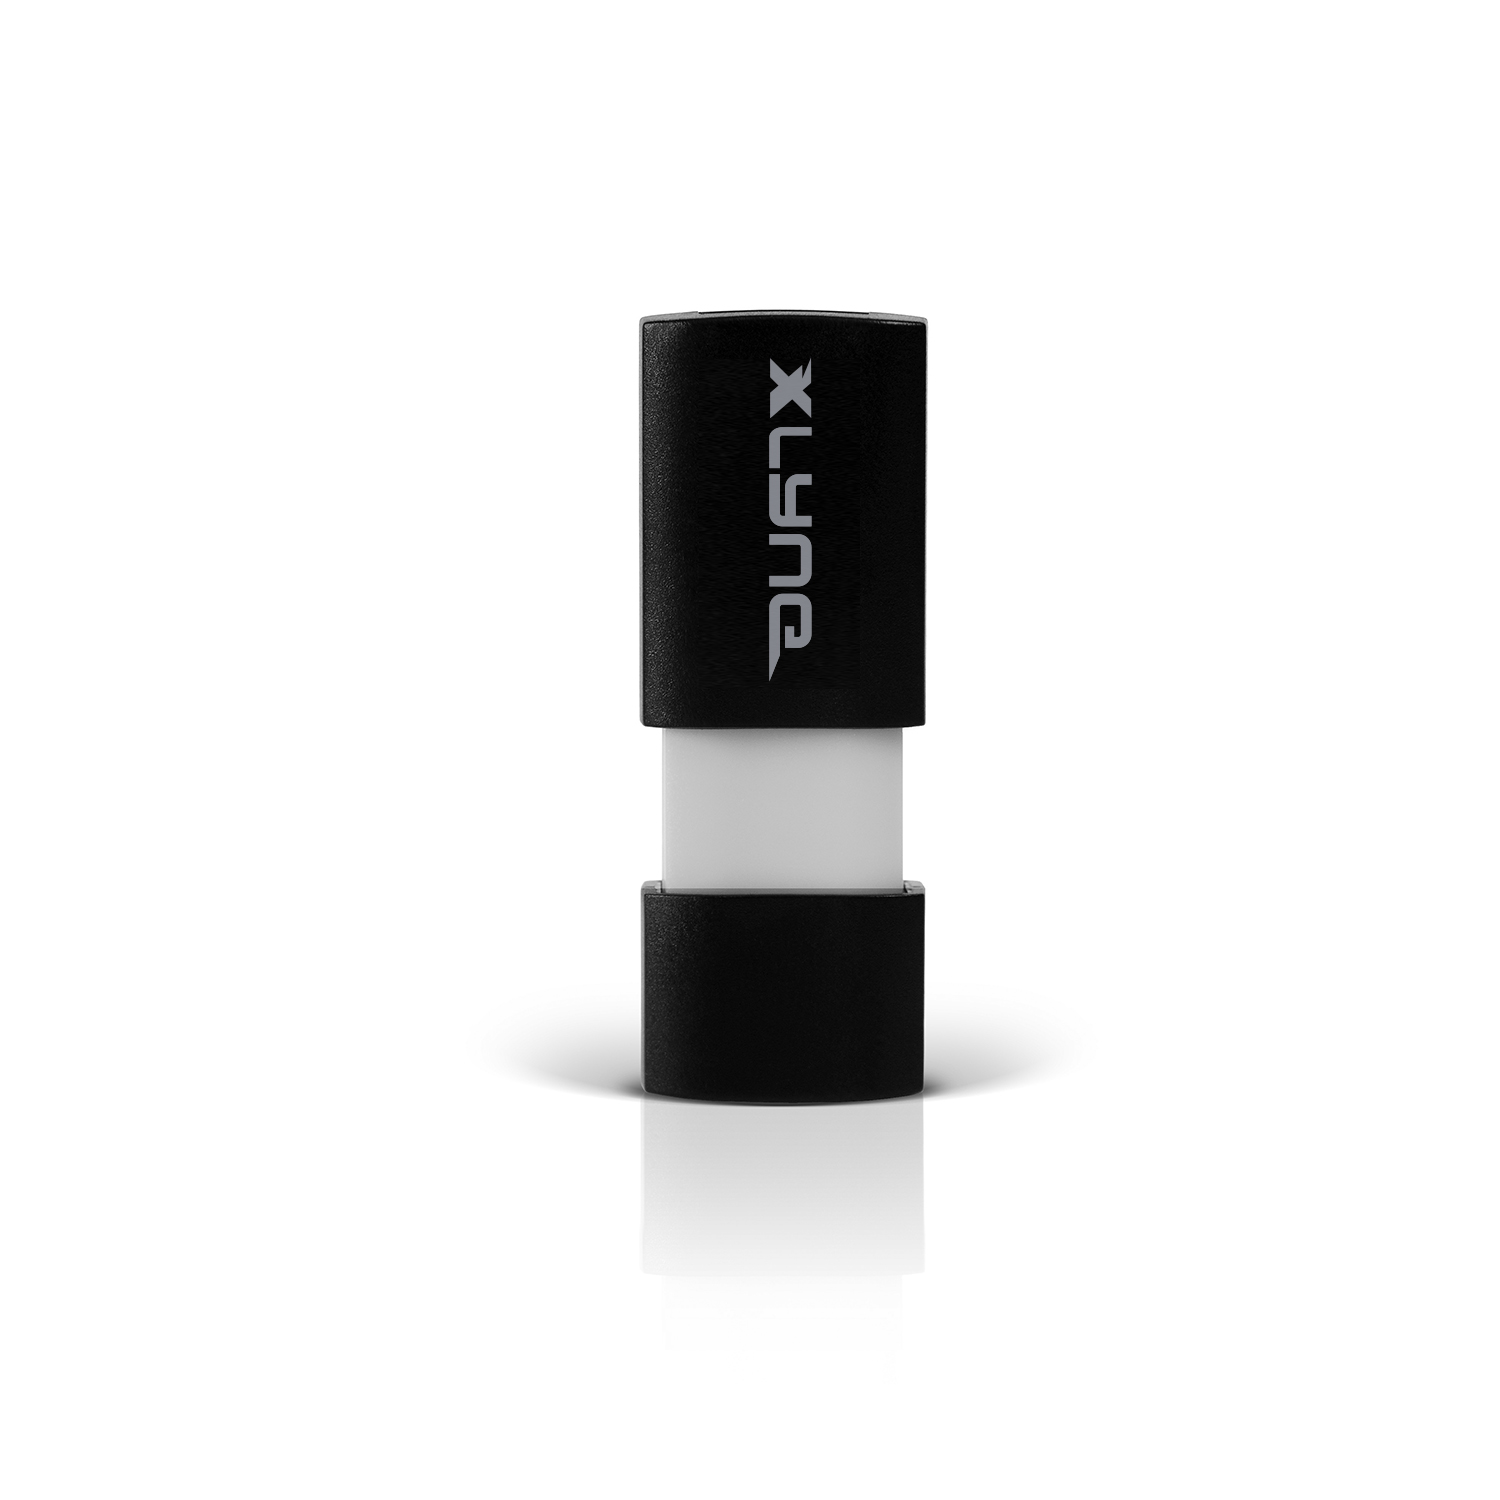 3.0 - XLYNE 512 GB USB Stick USB